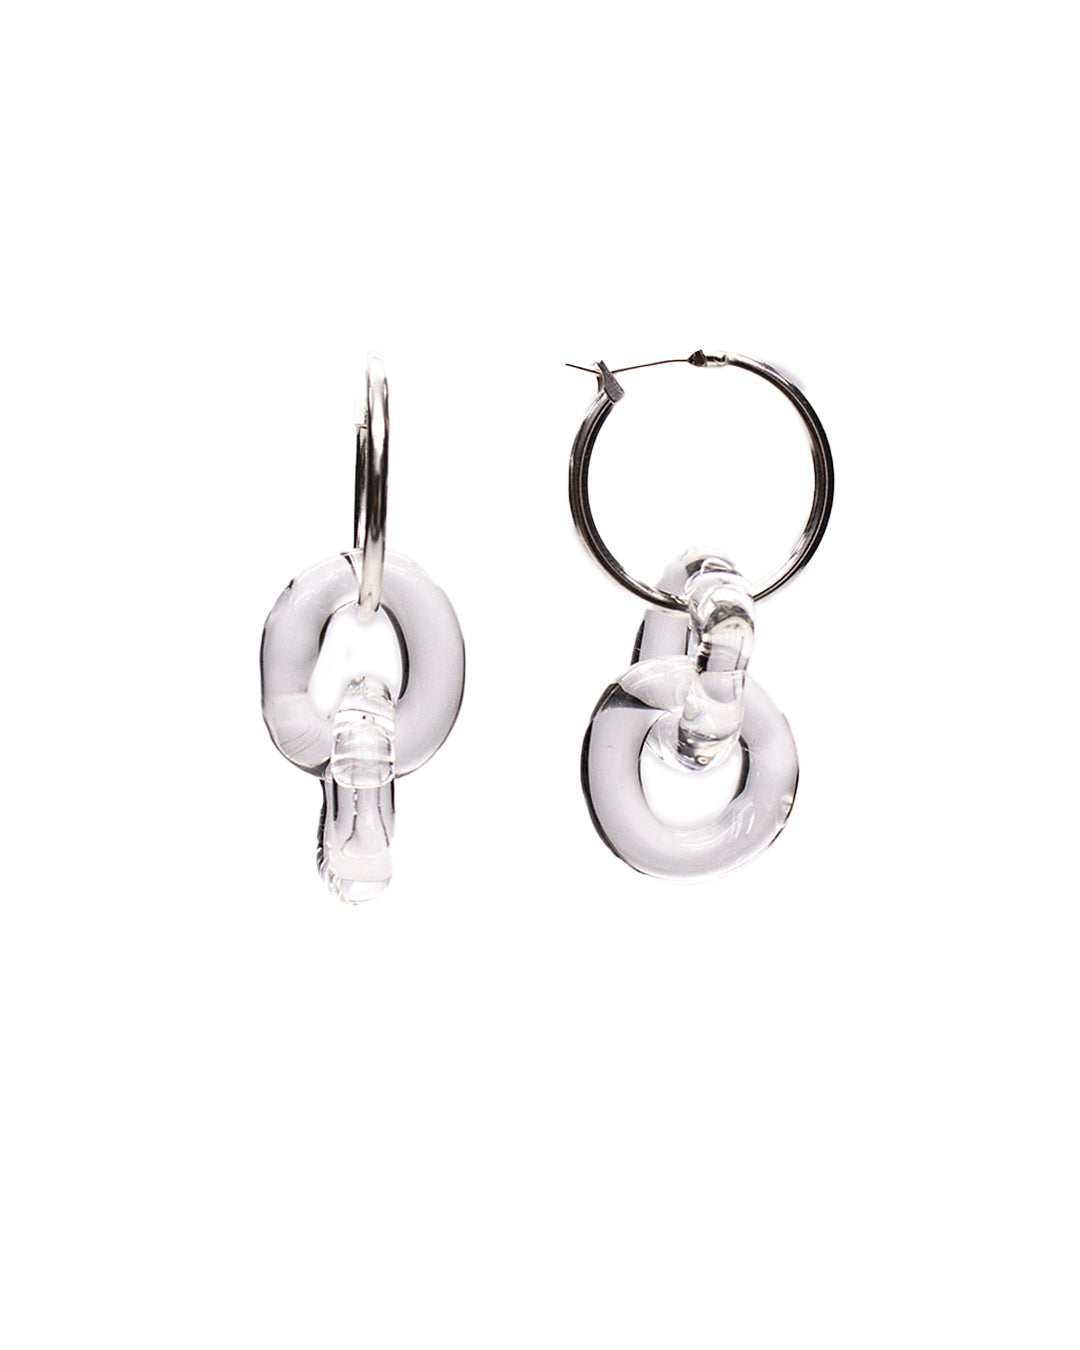 Handmade glass earrings - SiO2 Glass Jewelry